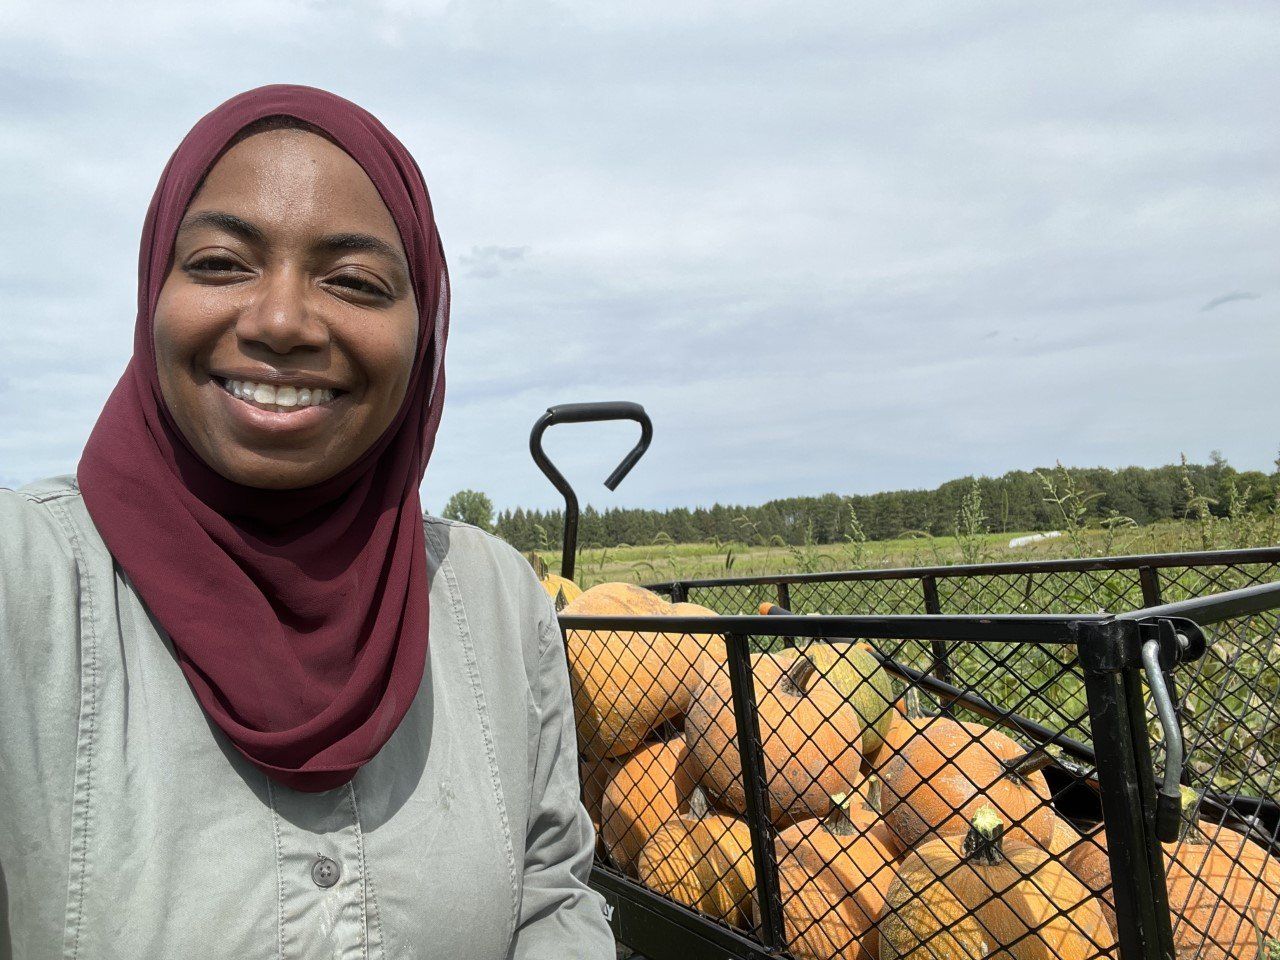 Previous Happening: Meet BRF Farmer Whitney of Asfora Farm